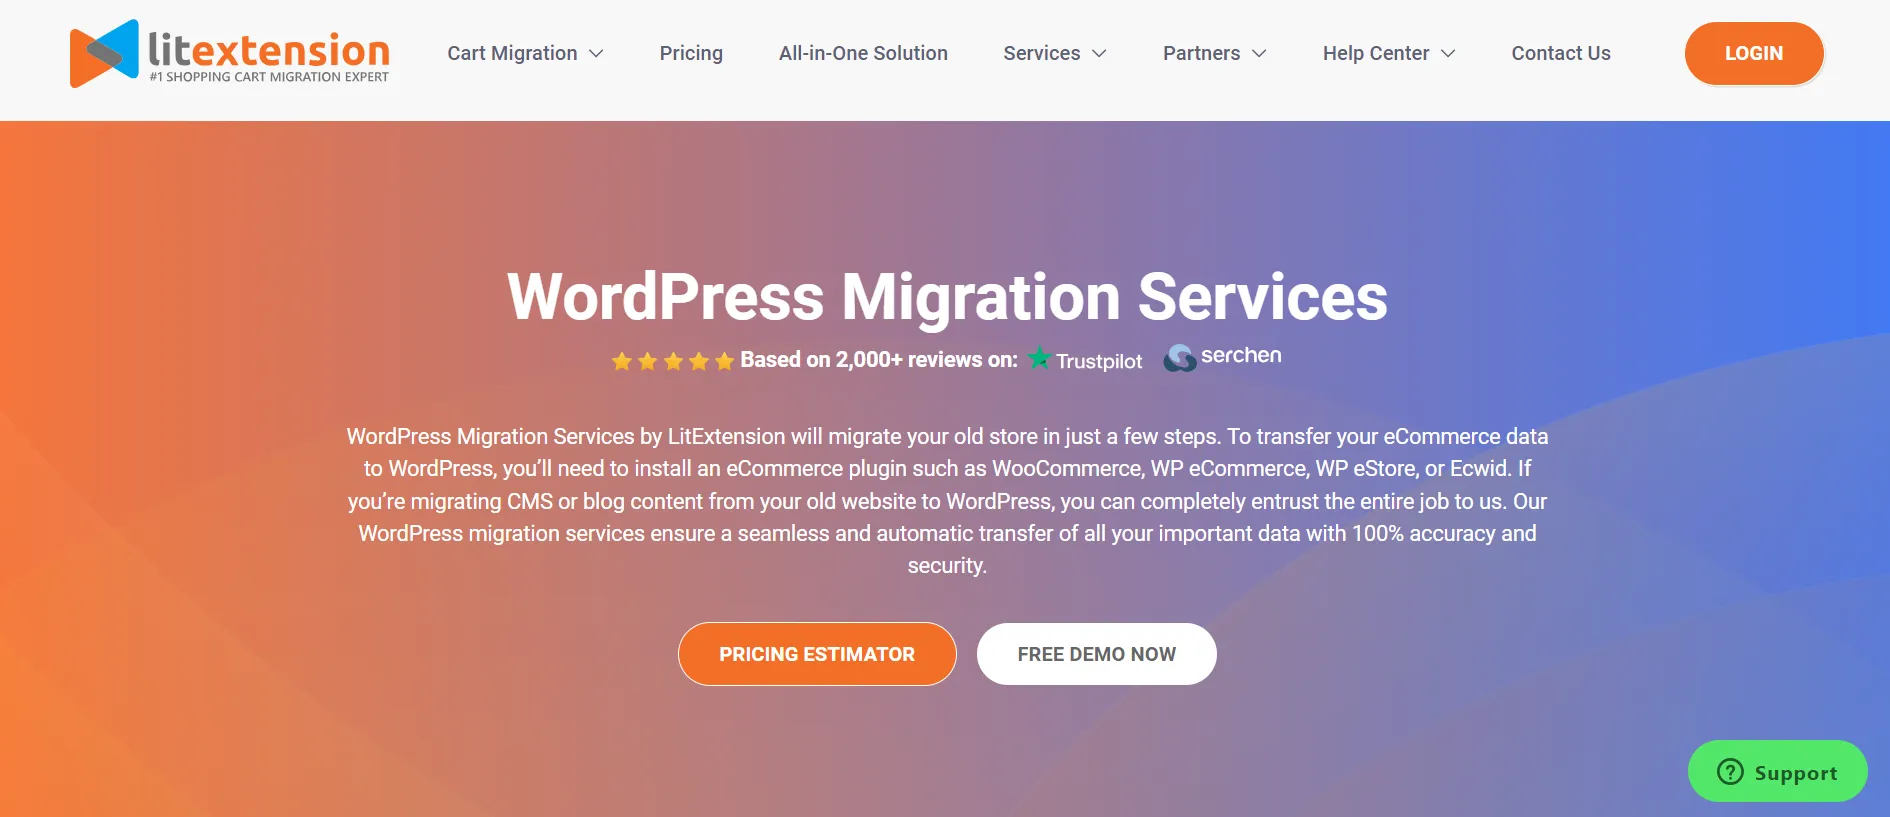 WordPress migration with LitExtension